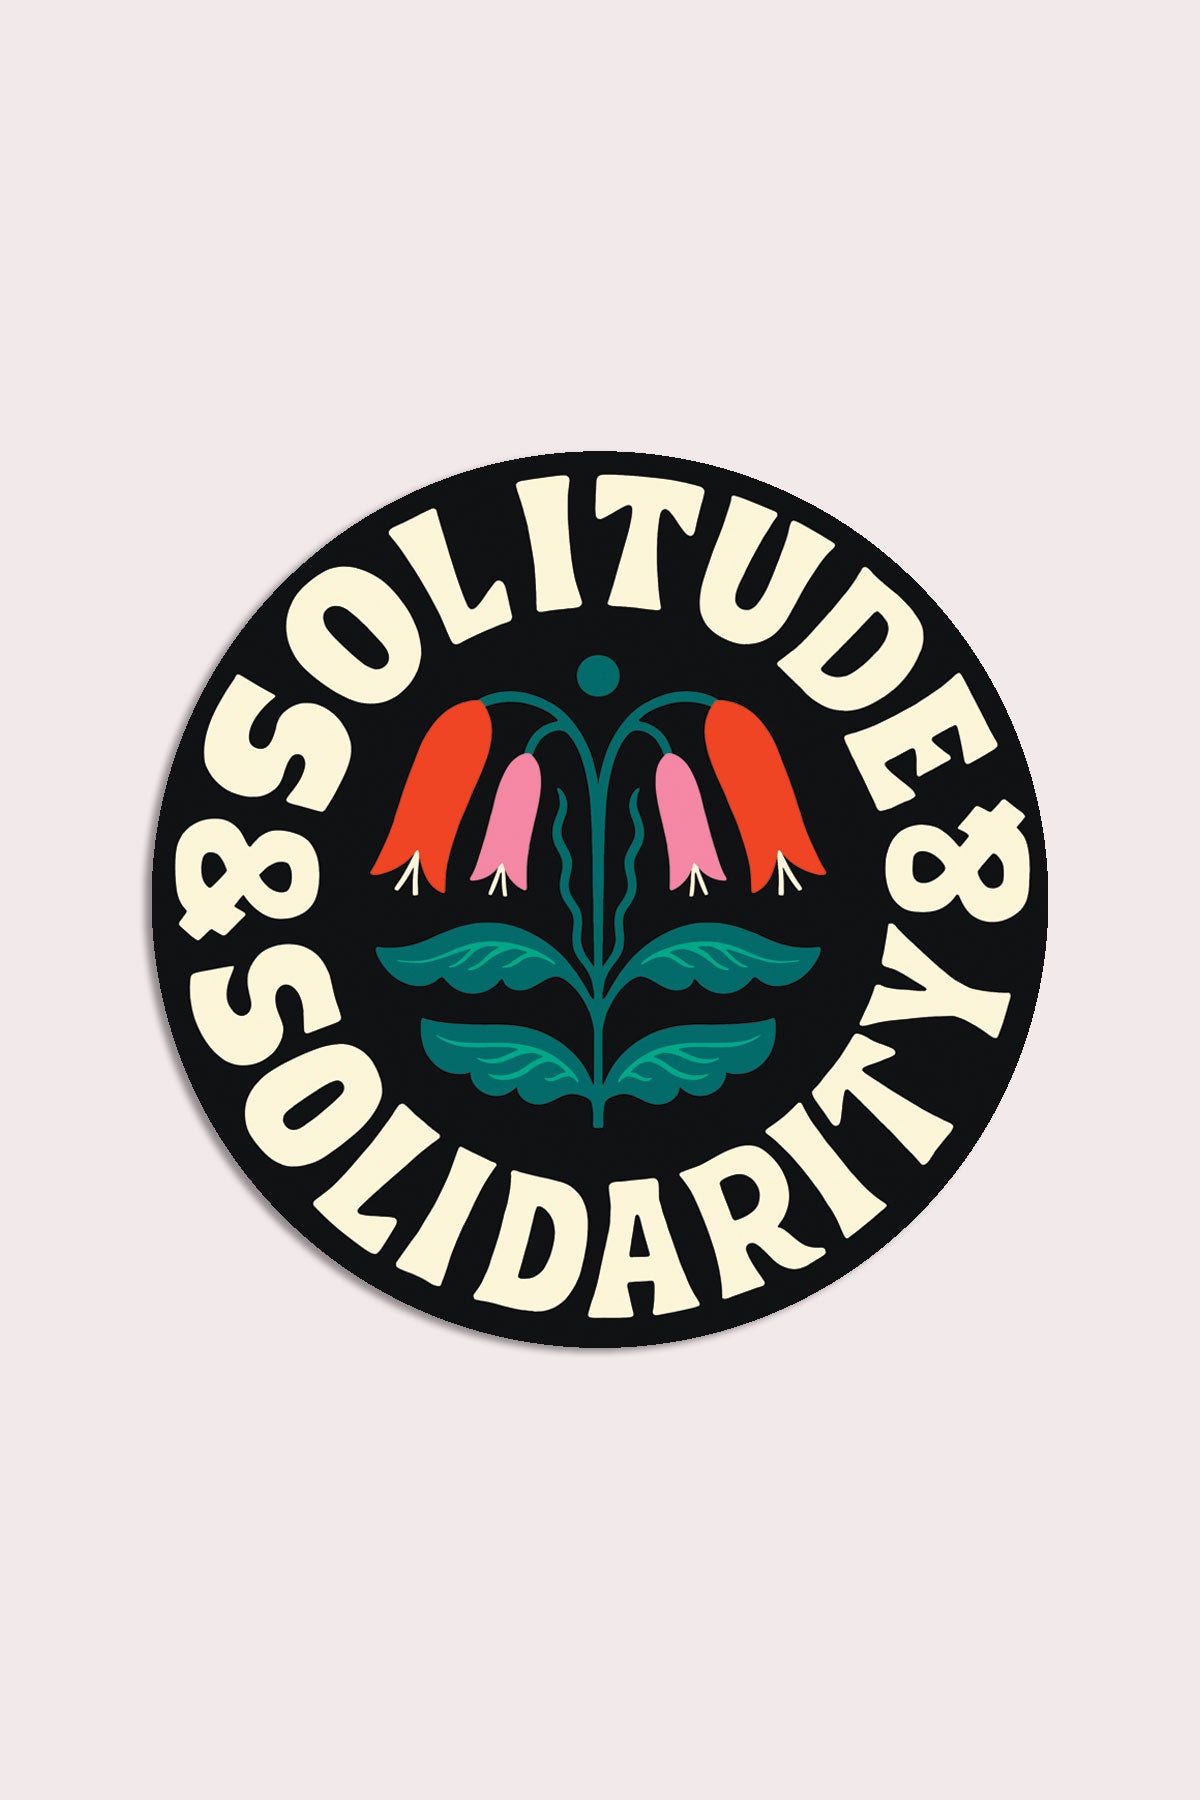 Autocollant 'Solitude and Solidarity'